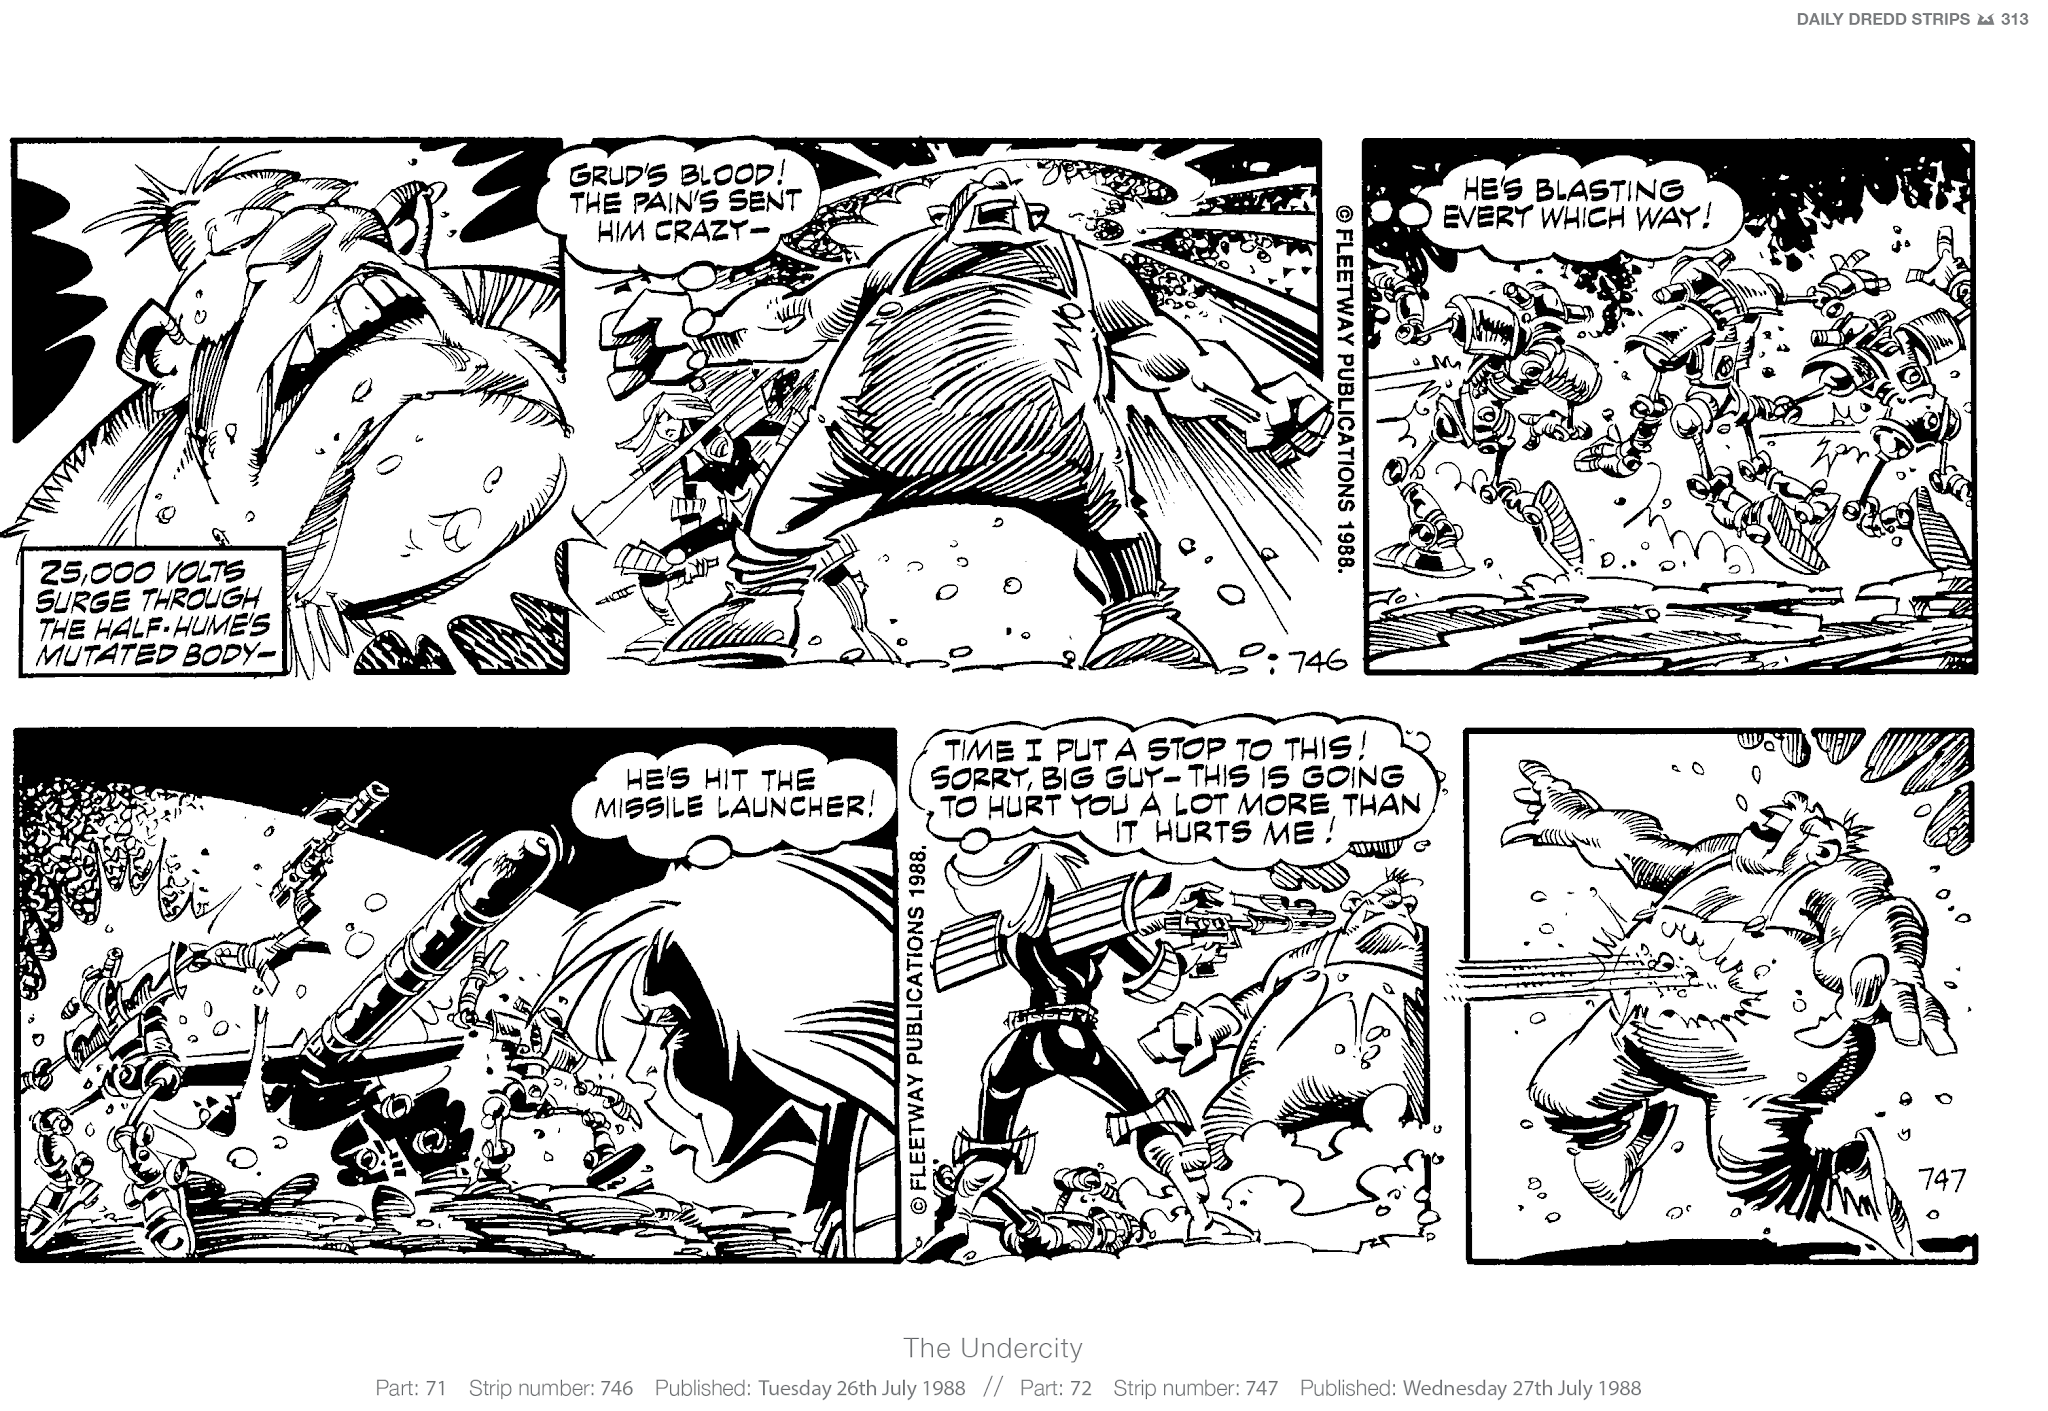 Read online Judge Dredd: The Daily Dredds comic -  Issue # TPB 2 - 316